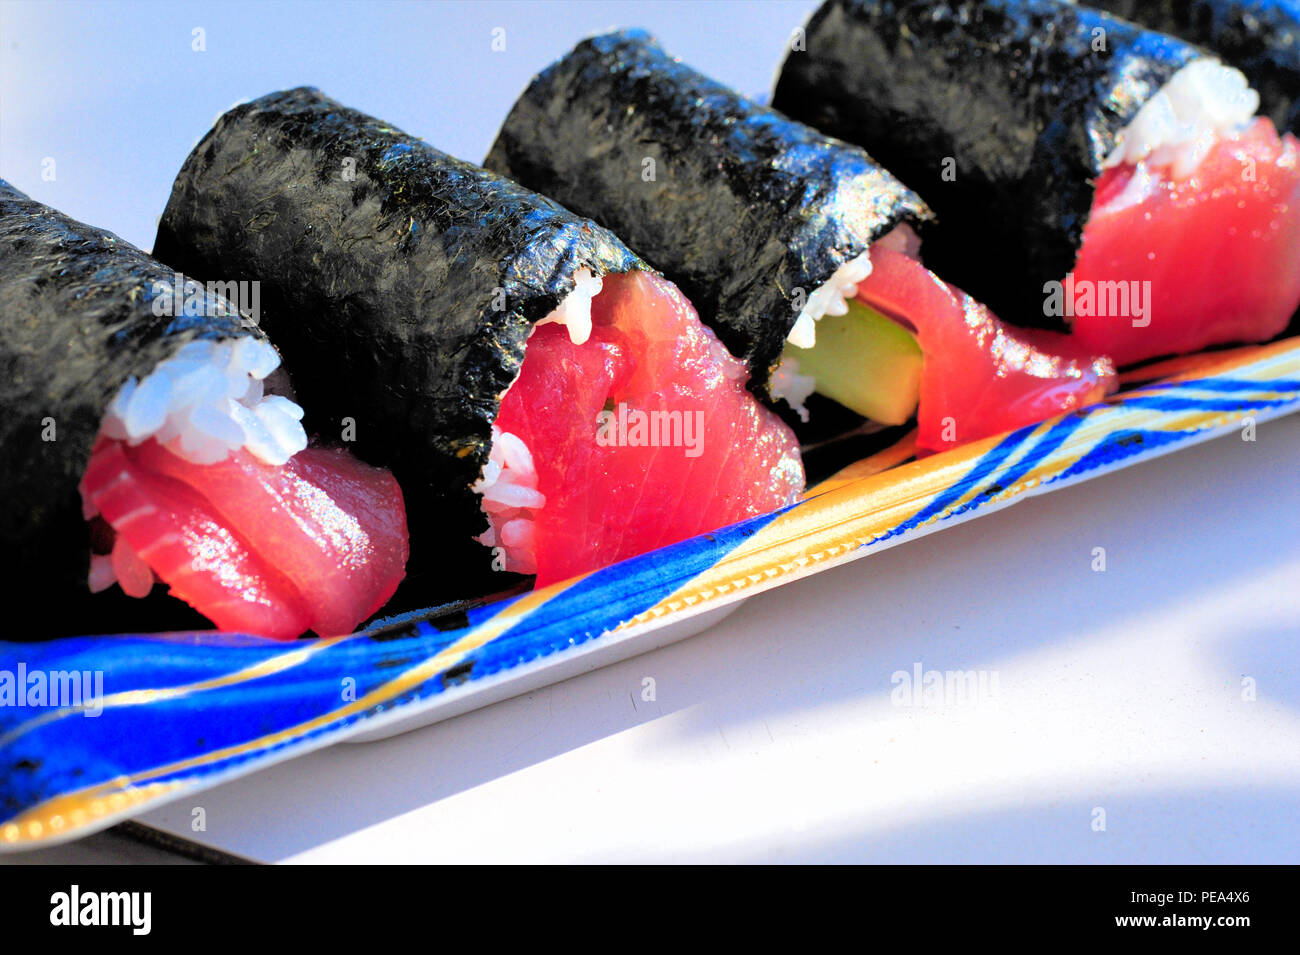 Tekka Maki (Tuna Sushi Roll) – Takes Two Eggs